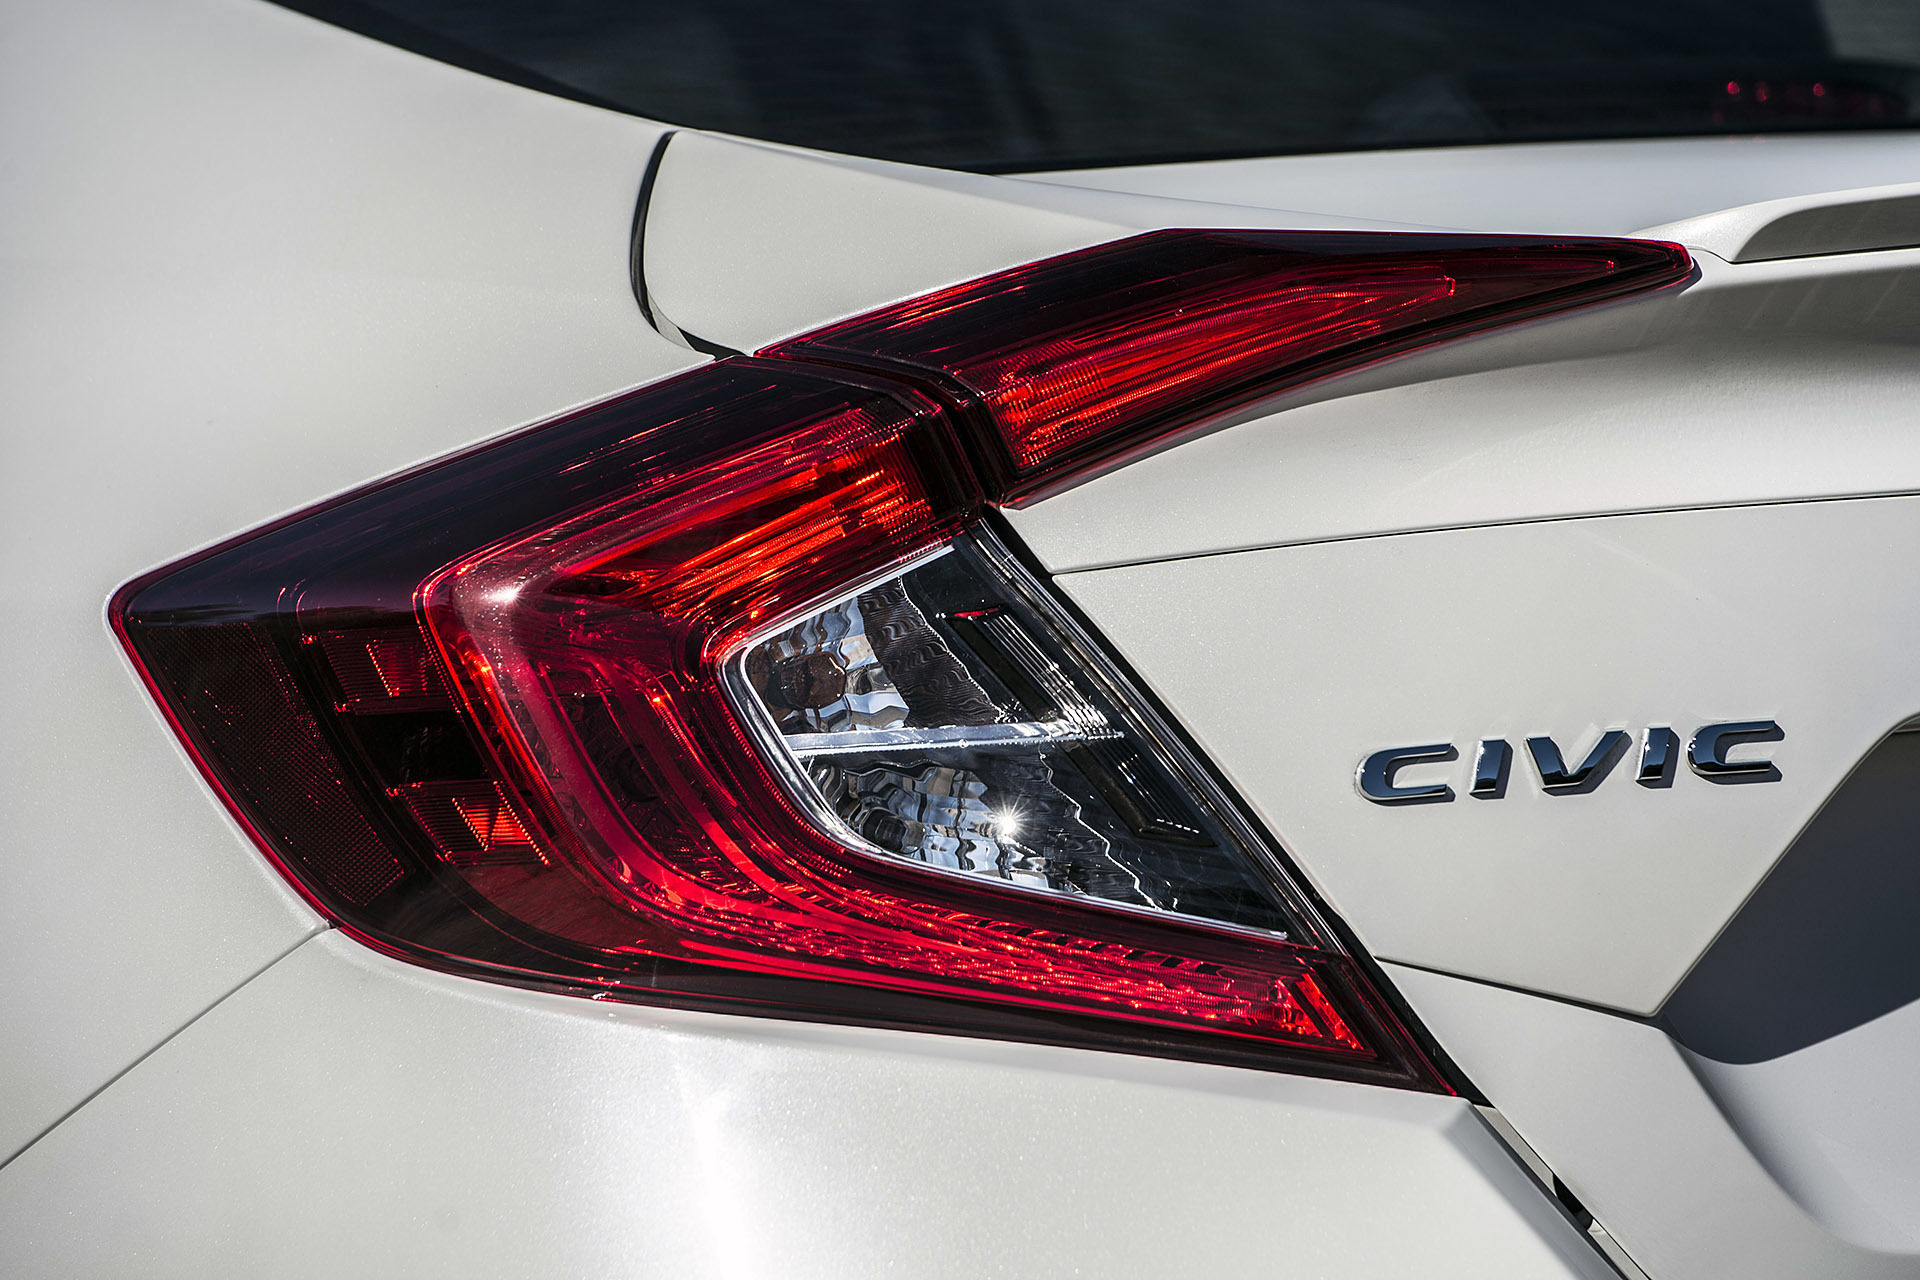 Honda Civic taillight and badge